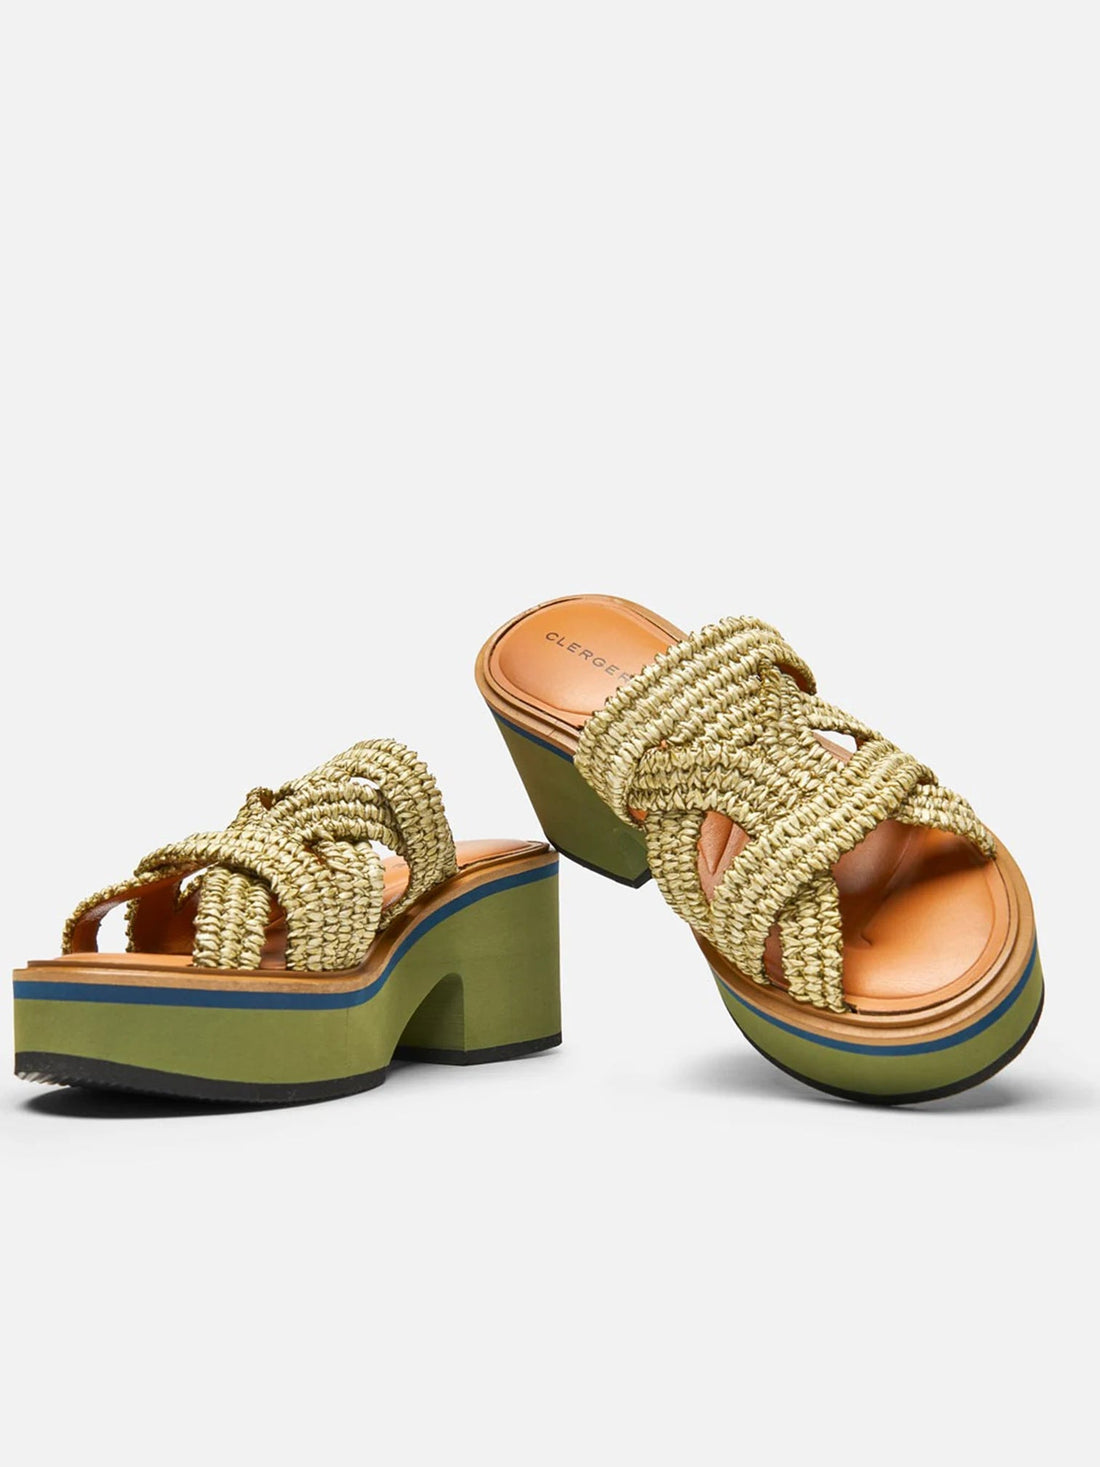 MULES - CHERMY slippers, aloe green &amp; raffia || OUTLET - CHERMYALORAFM340 - Clergerie Paris - USA